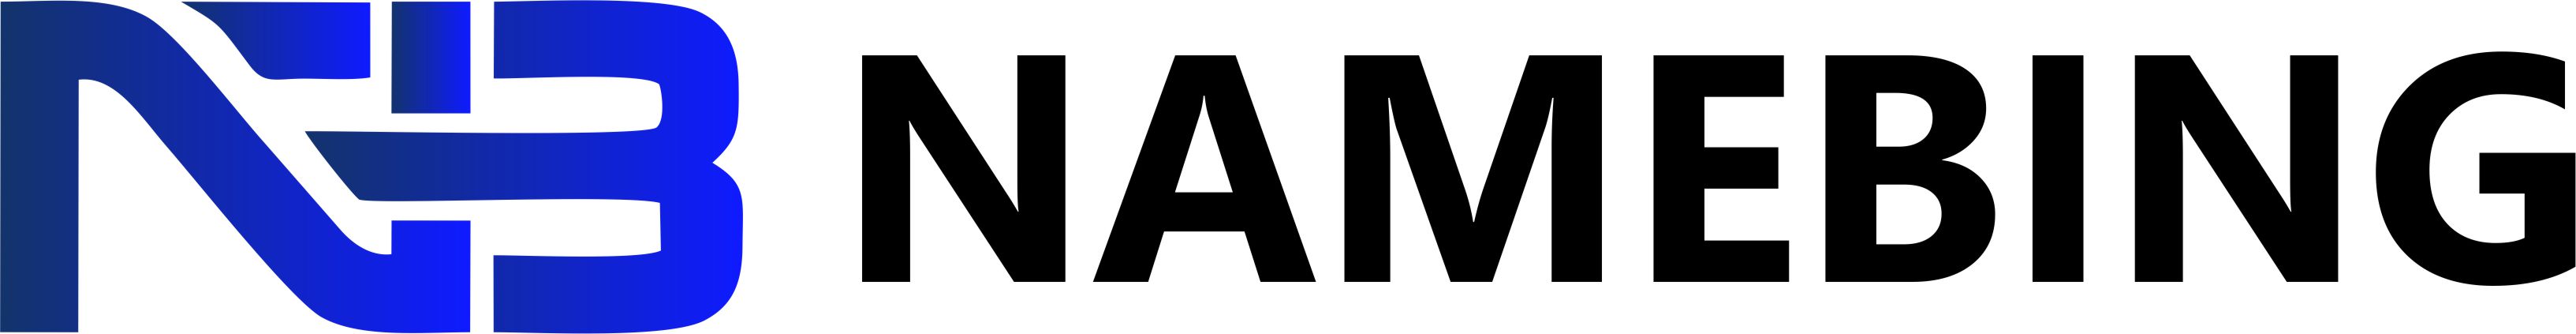 Namebing-Logo-software-development-company-in-pune